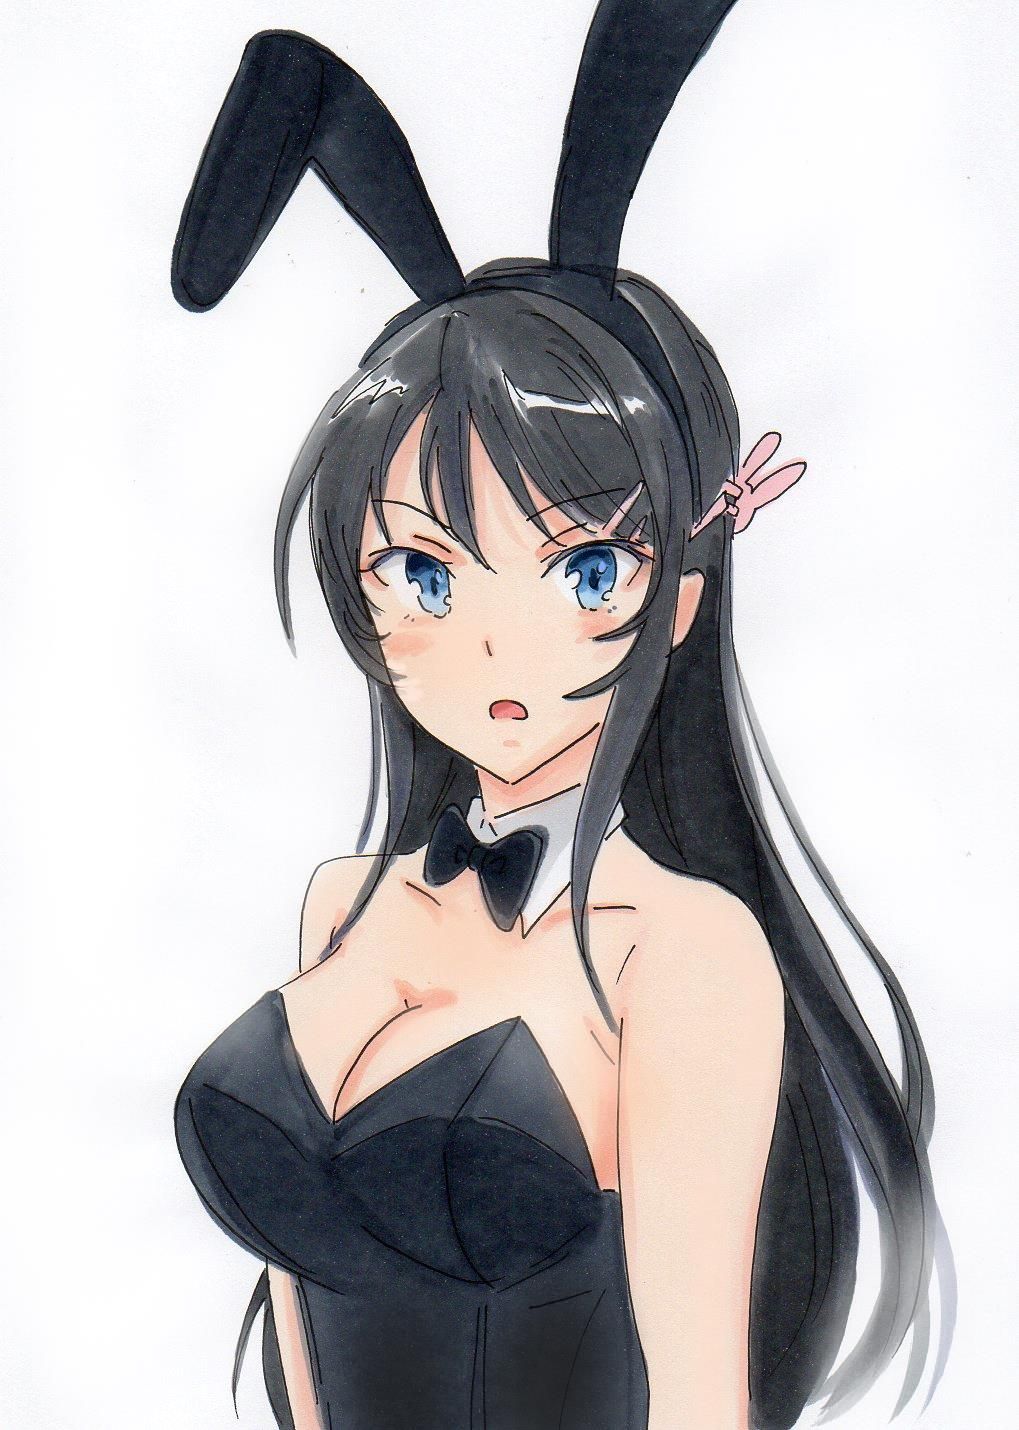 [Secondary/ZIP] Wild bunny girl mai sakurajima cute picture of the seniors "youth Pig does not dream of a senior Bunny girl" 18